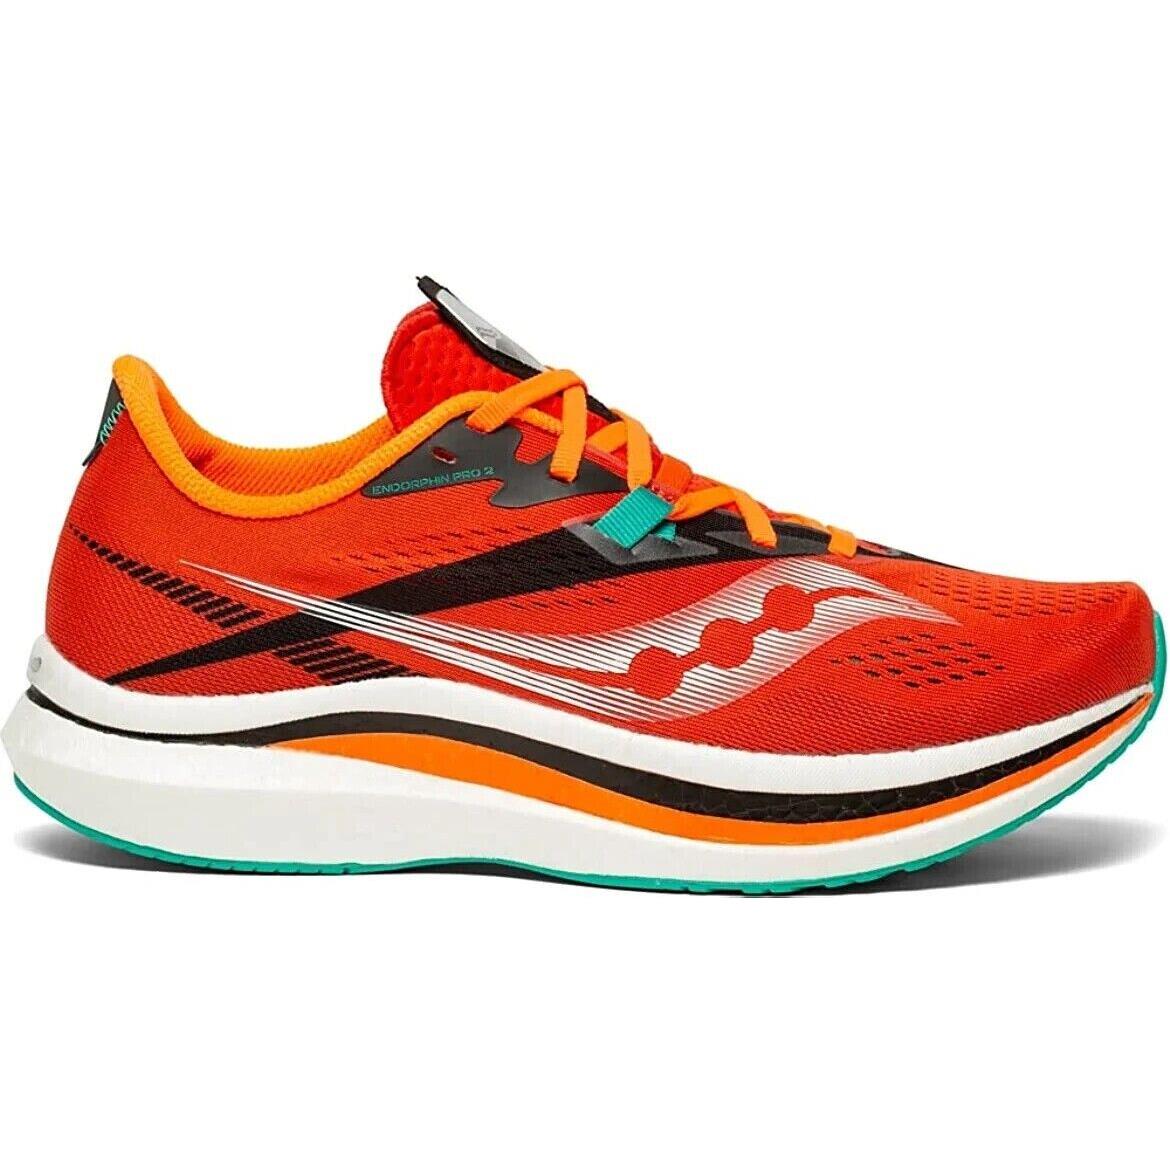 Saucony Men`s S20687-20 Endorphin Pro 2 Running Sneaker Shoes Size 12 M US